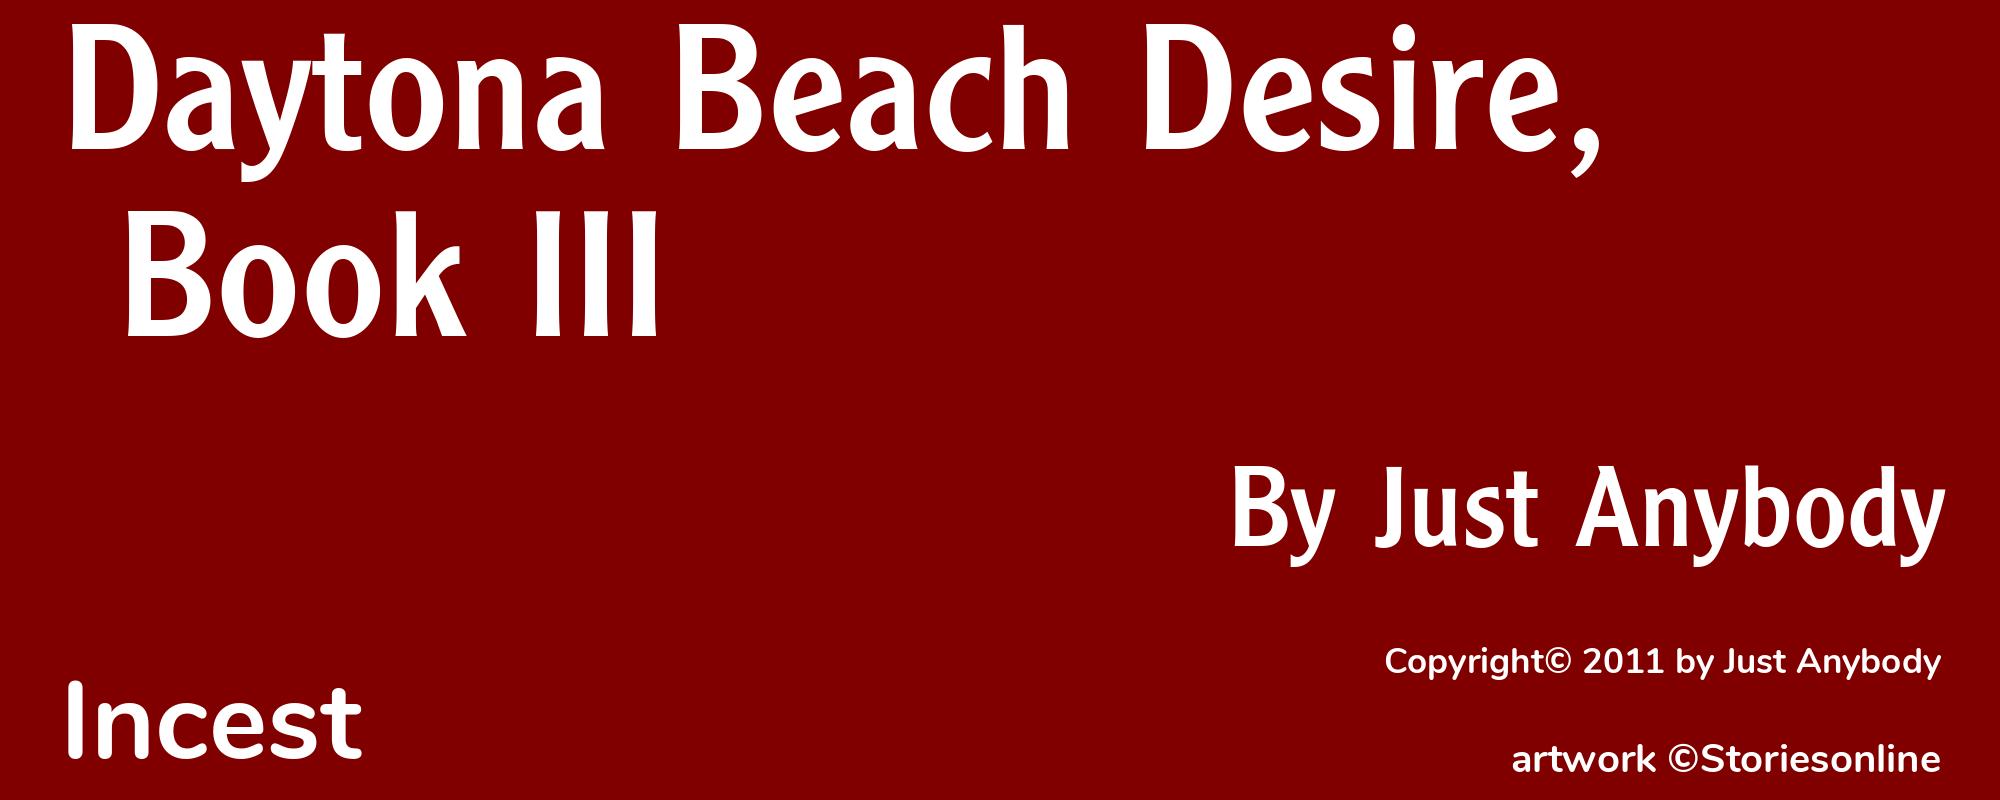 Daytona Beach Desire, Book III - Cover